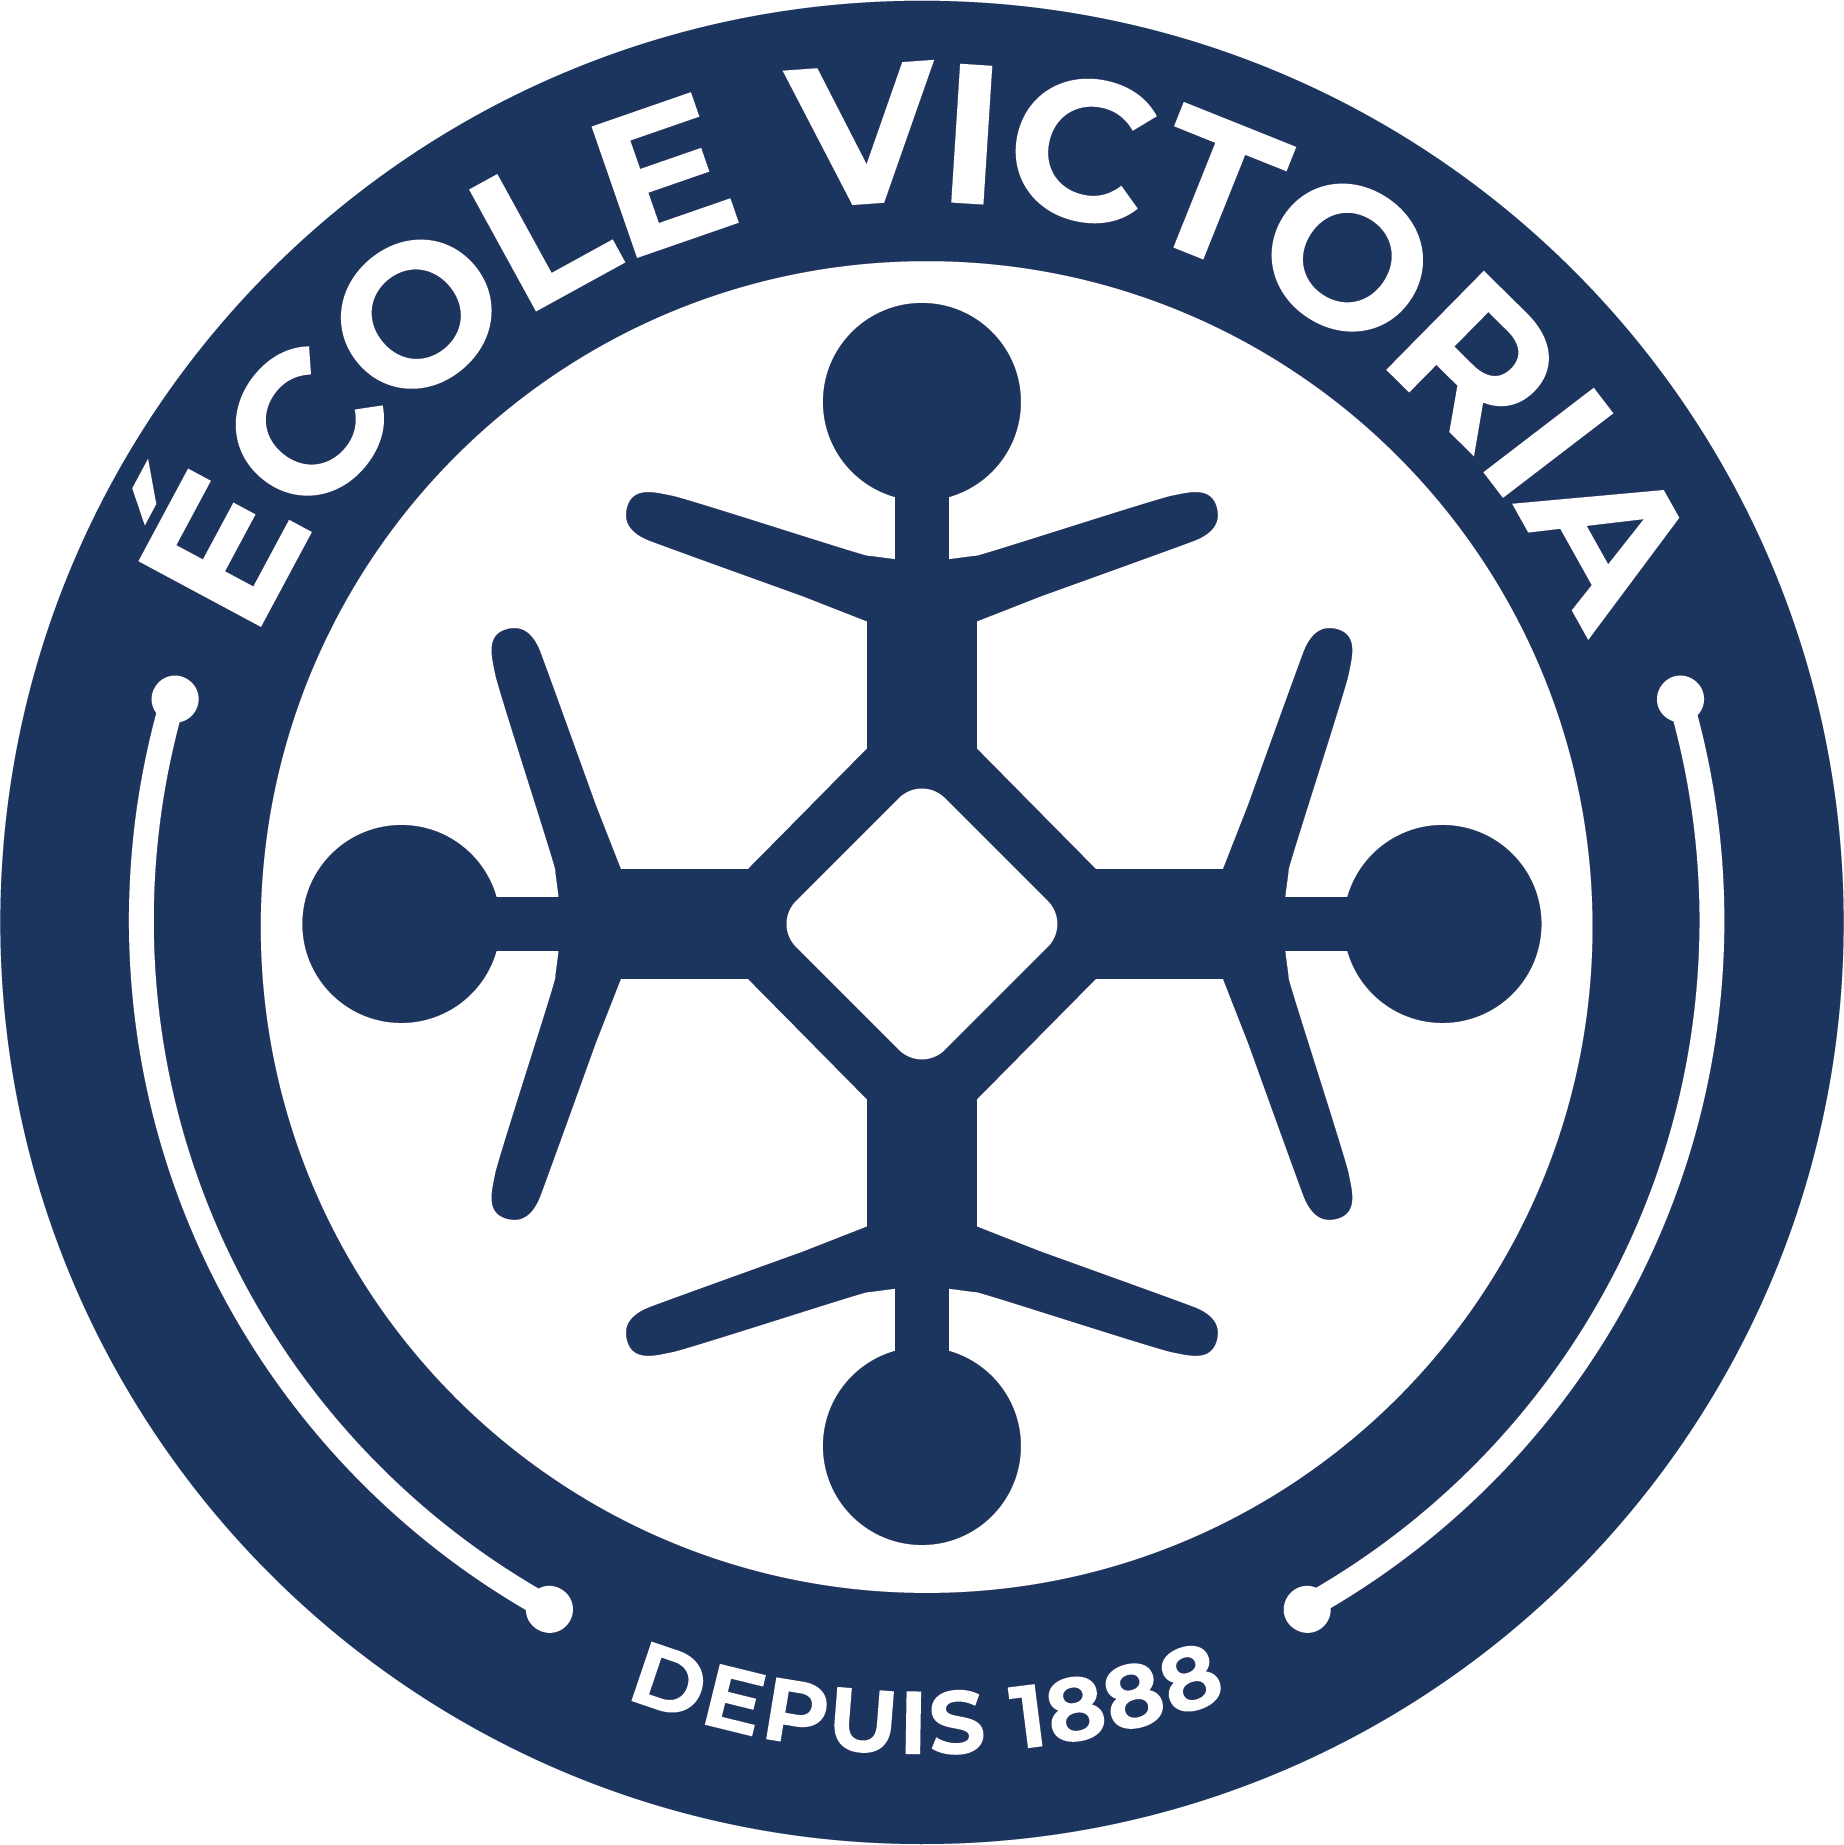 École Victoria School logo